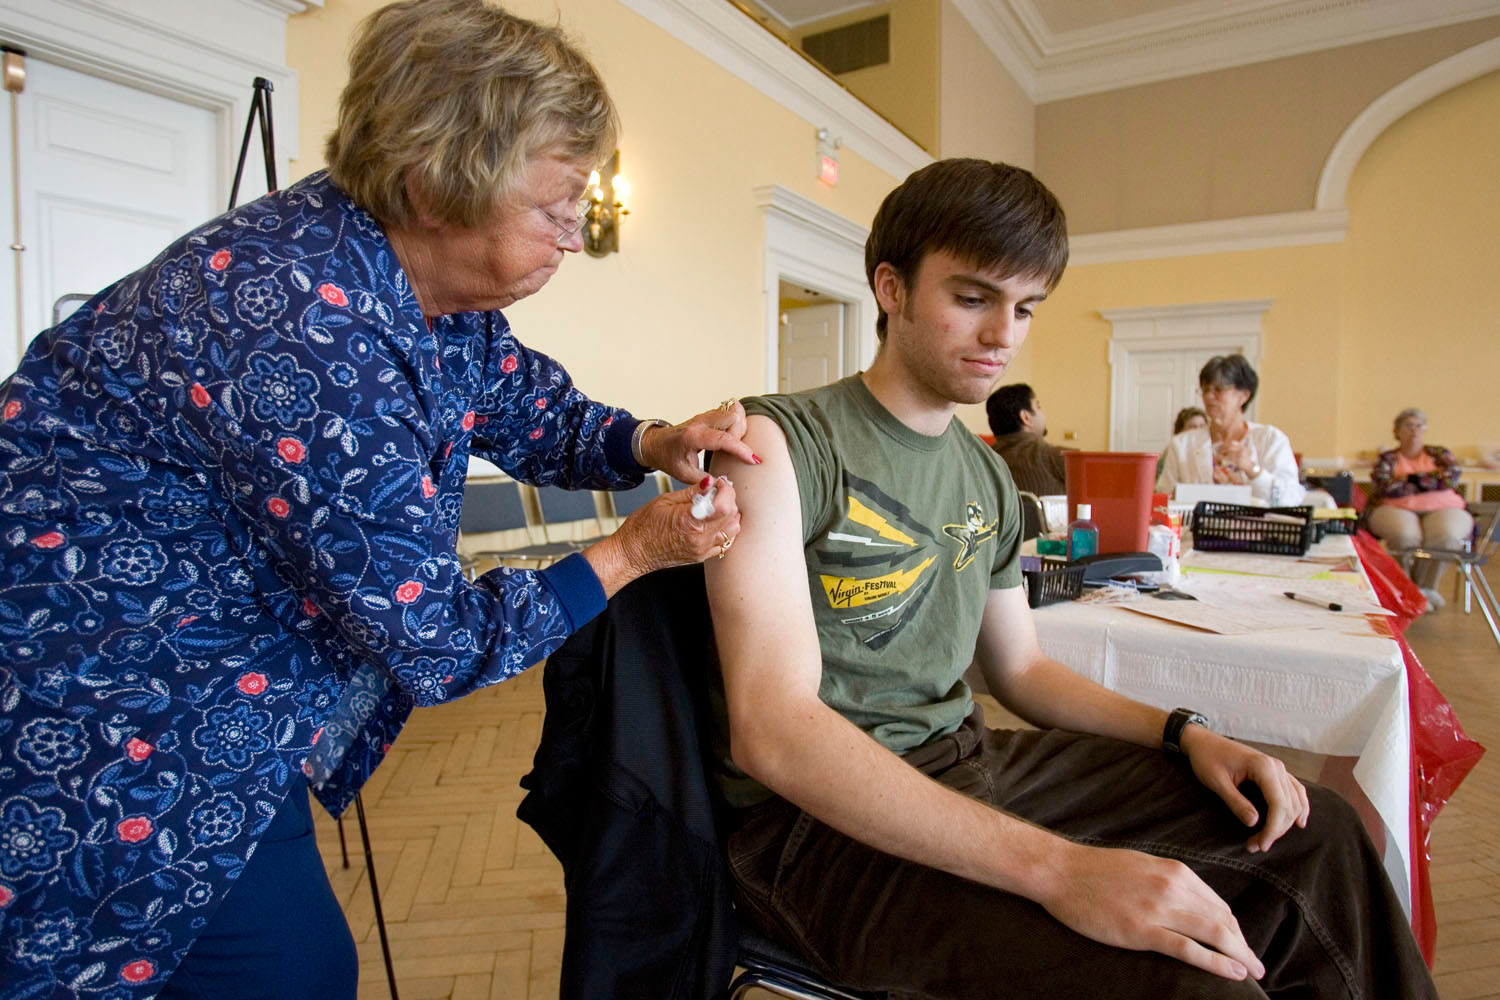 Patrick Neyland receives a flu shot from a Nurse